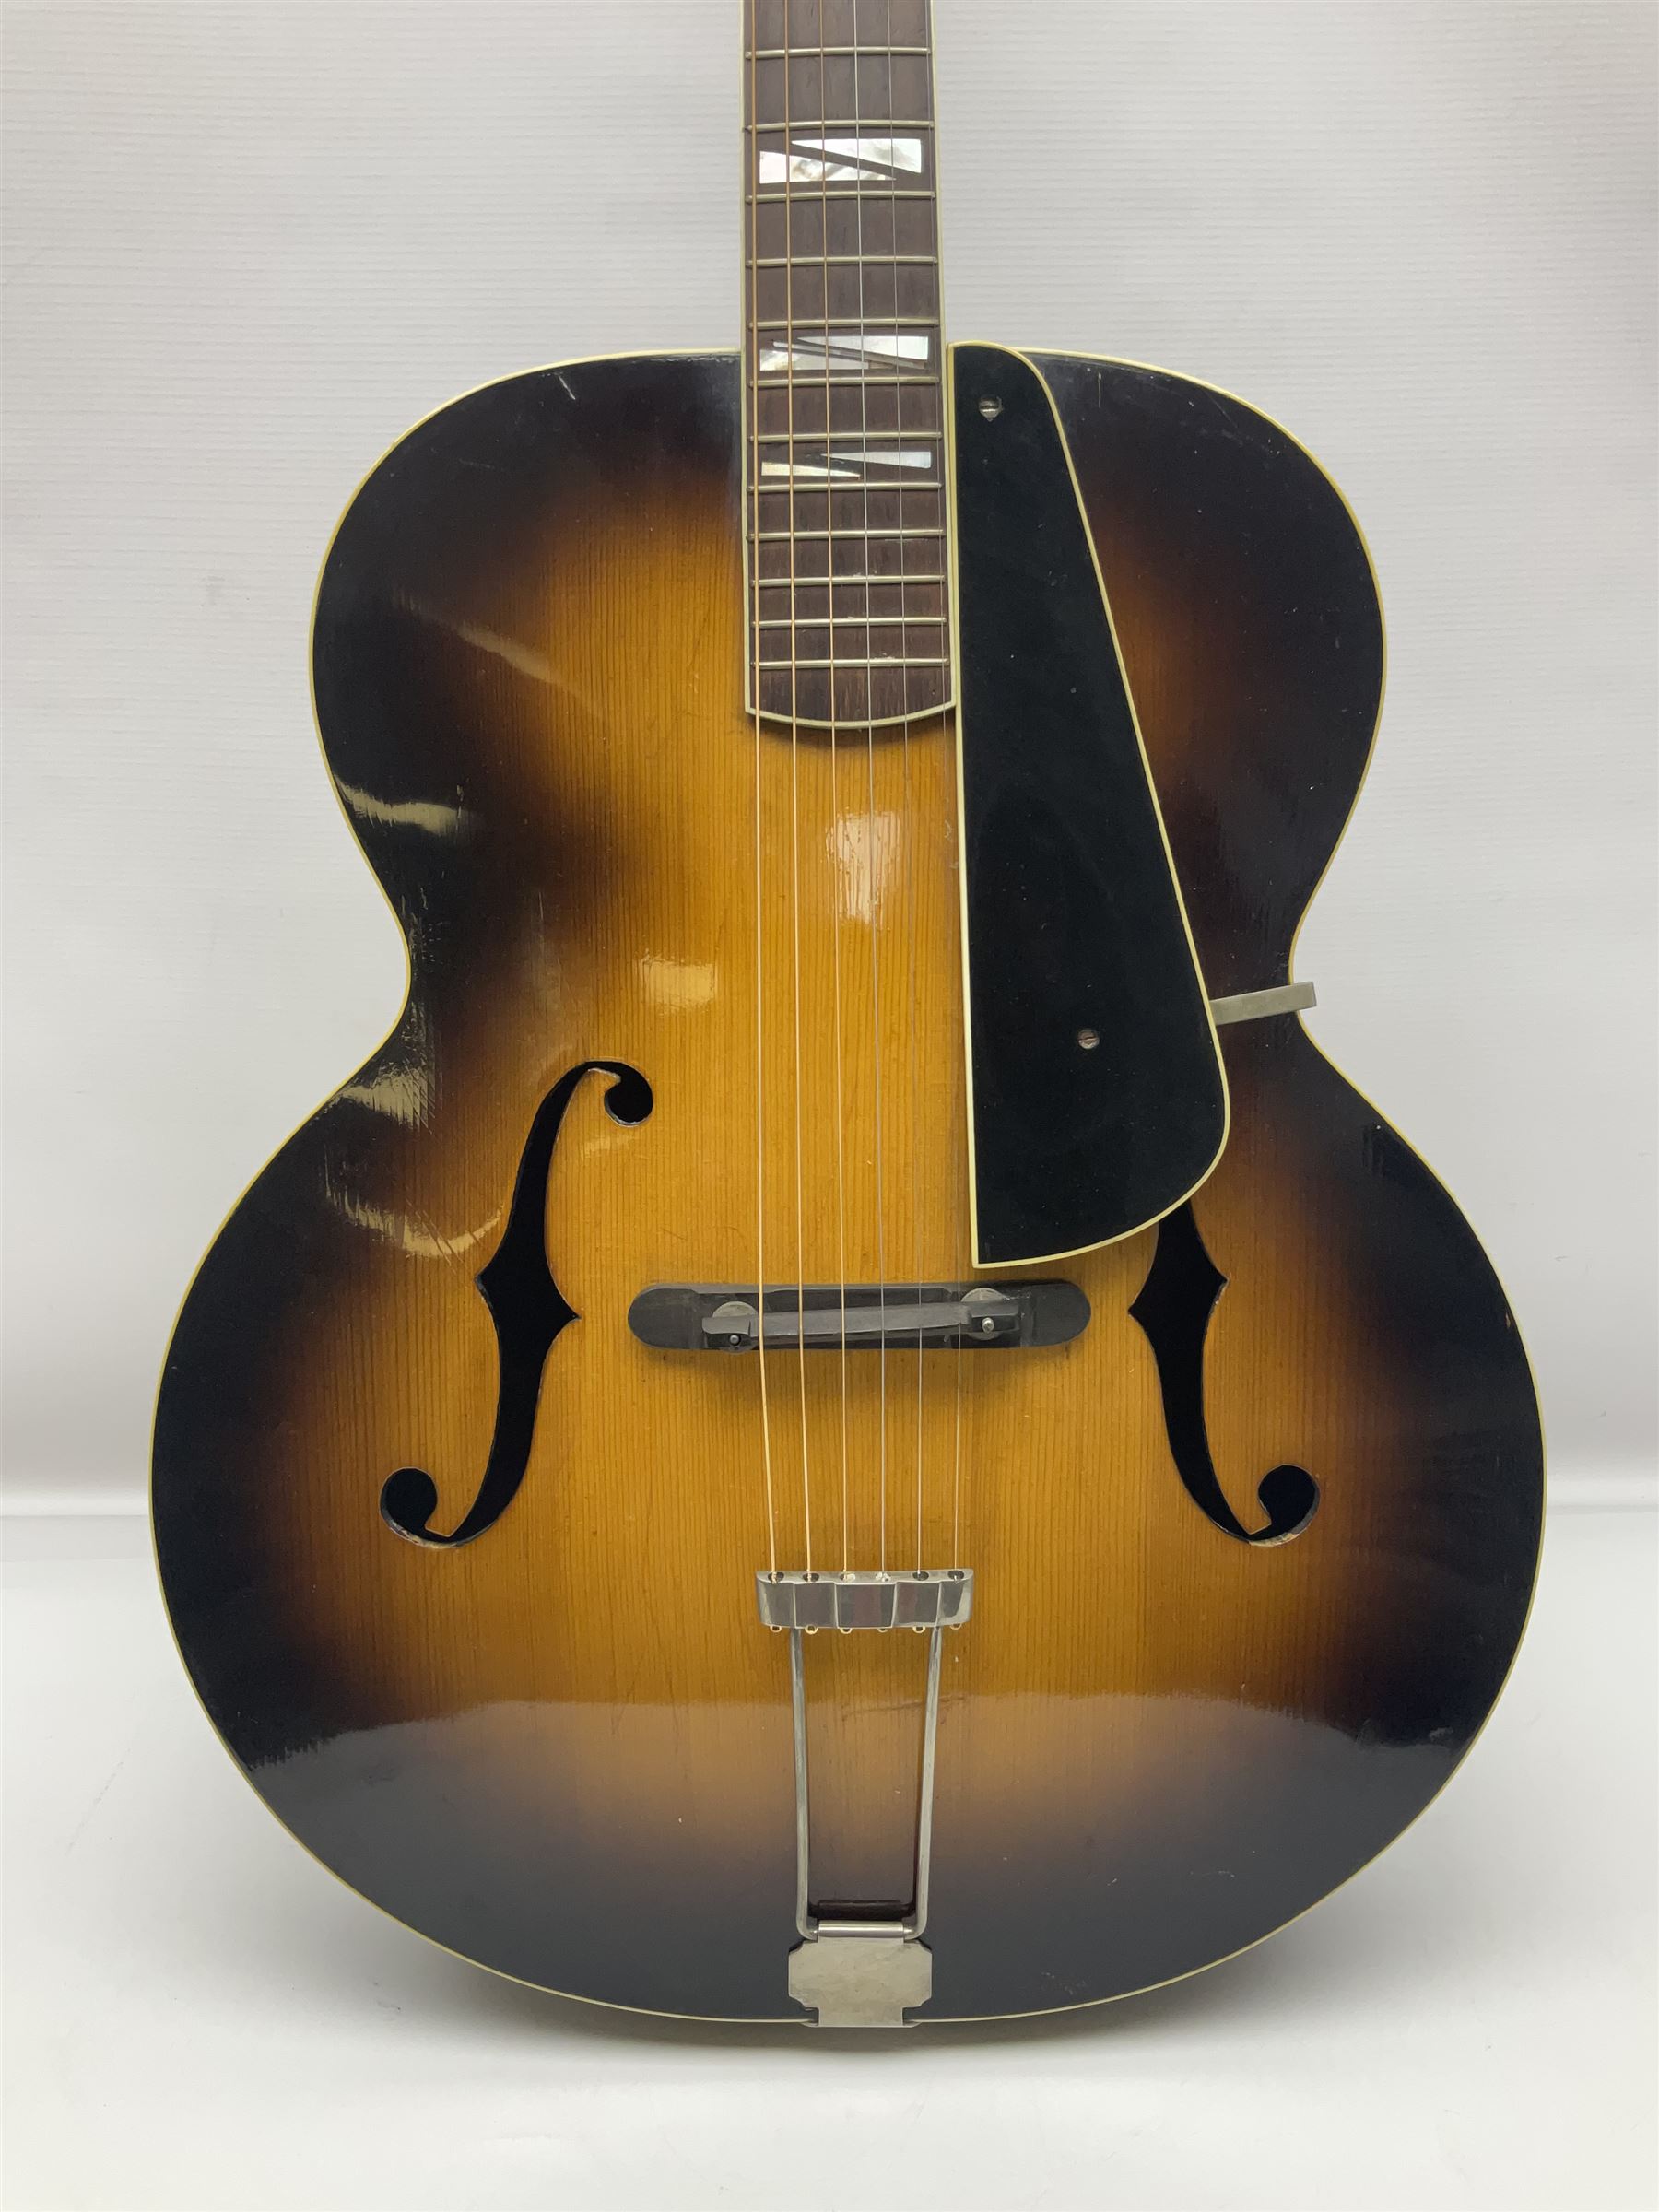 Clifford Essex Paragon De Luxe handmade acoustic guitar c1936 with tobacco sunburst finish and origi - Image 2 of 24